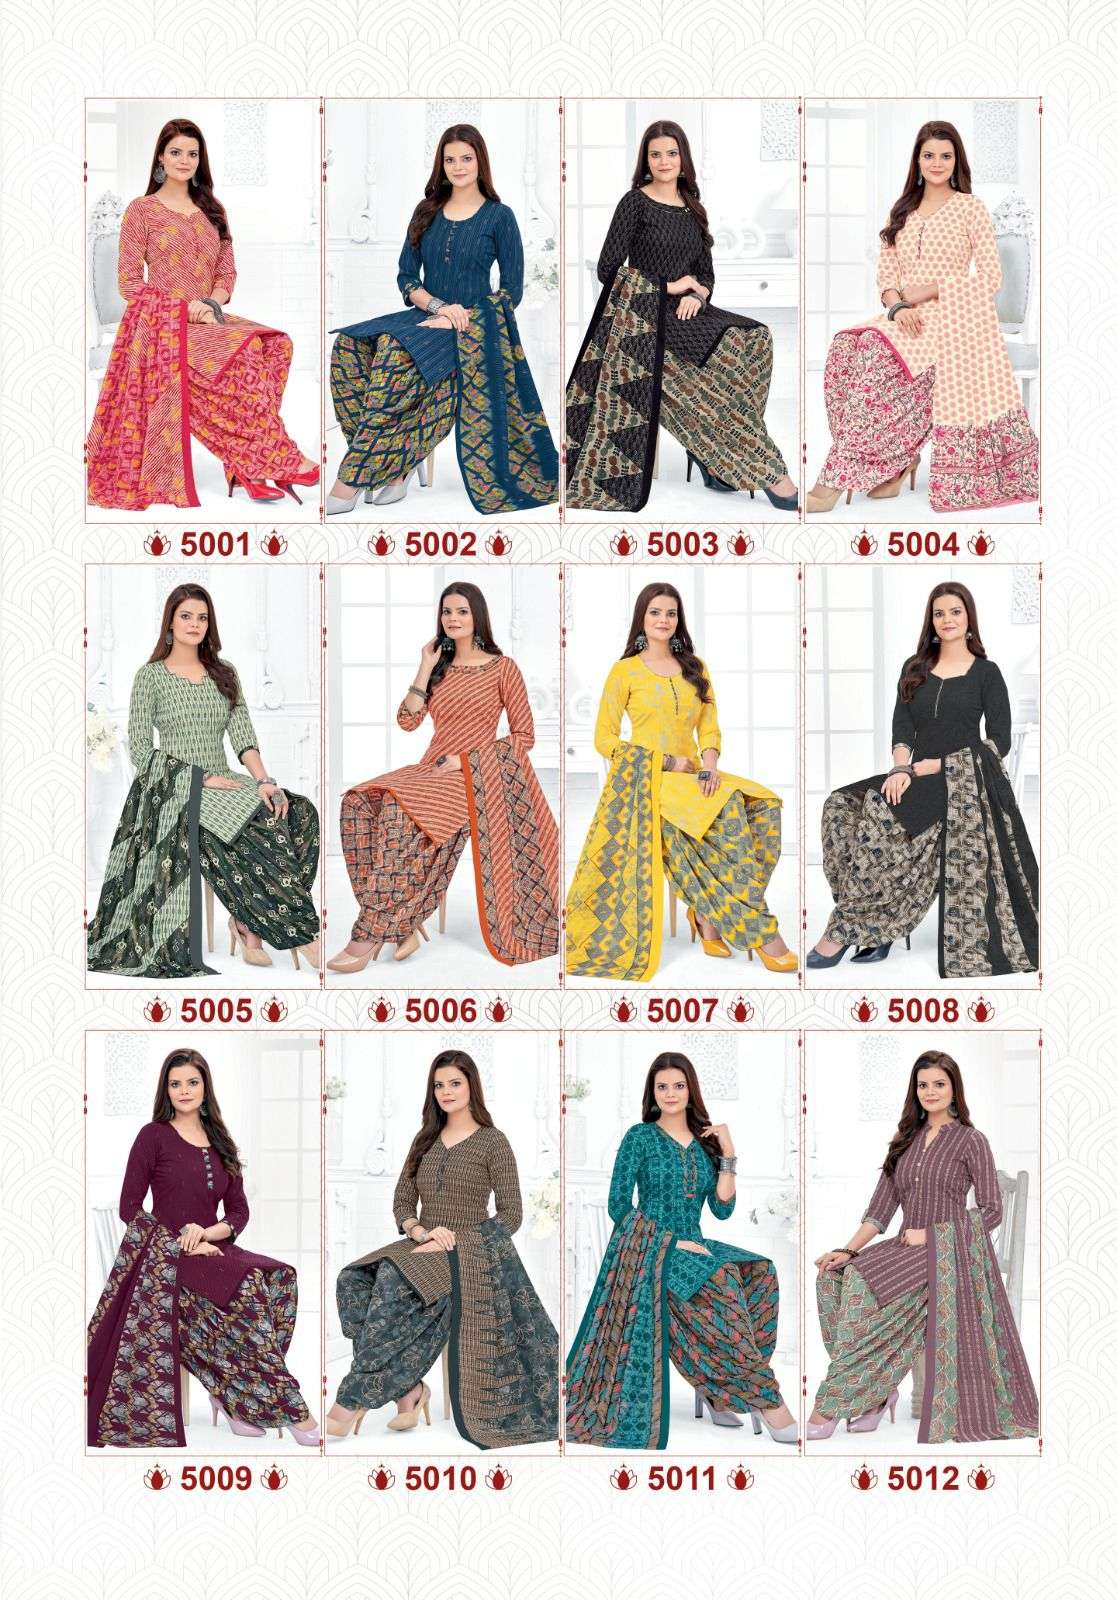 mfc shilpa patiyala vol-5 5001-5012 series cotton designer dress material catalogue wholesaler surat 